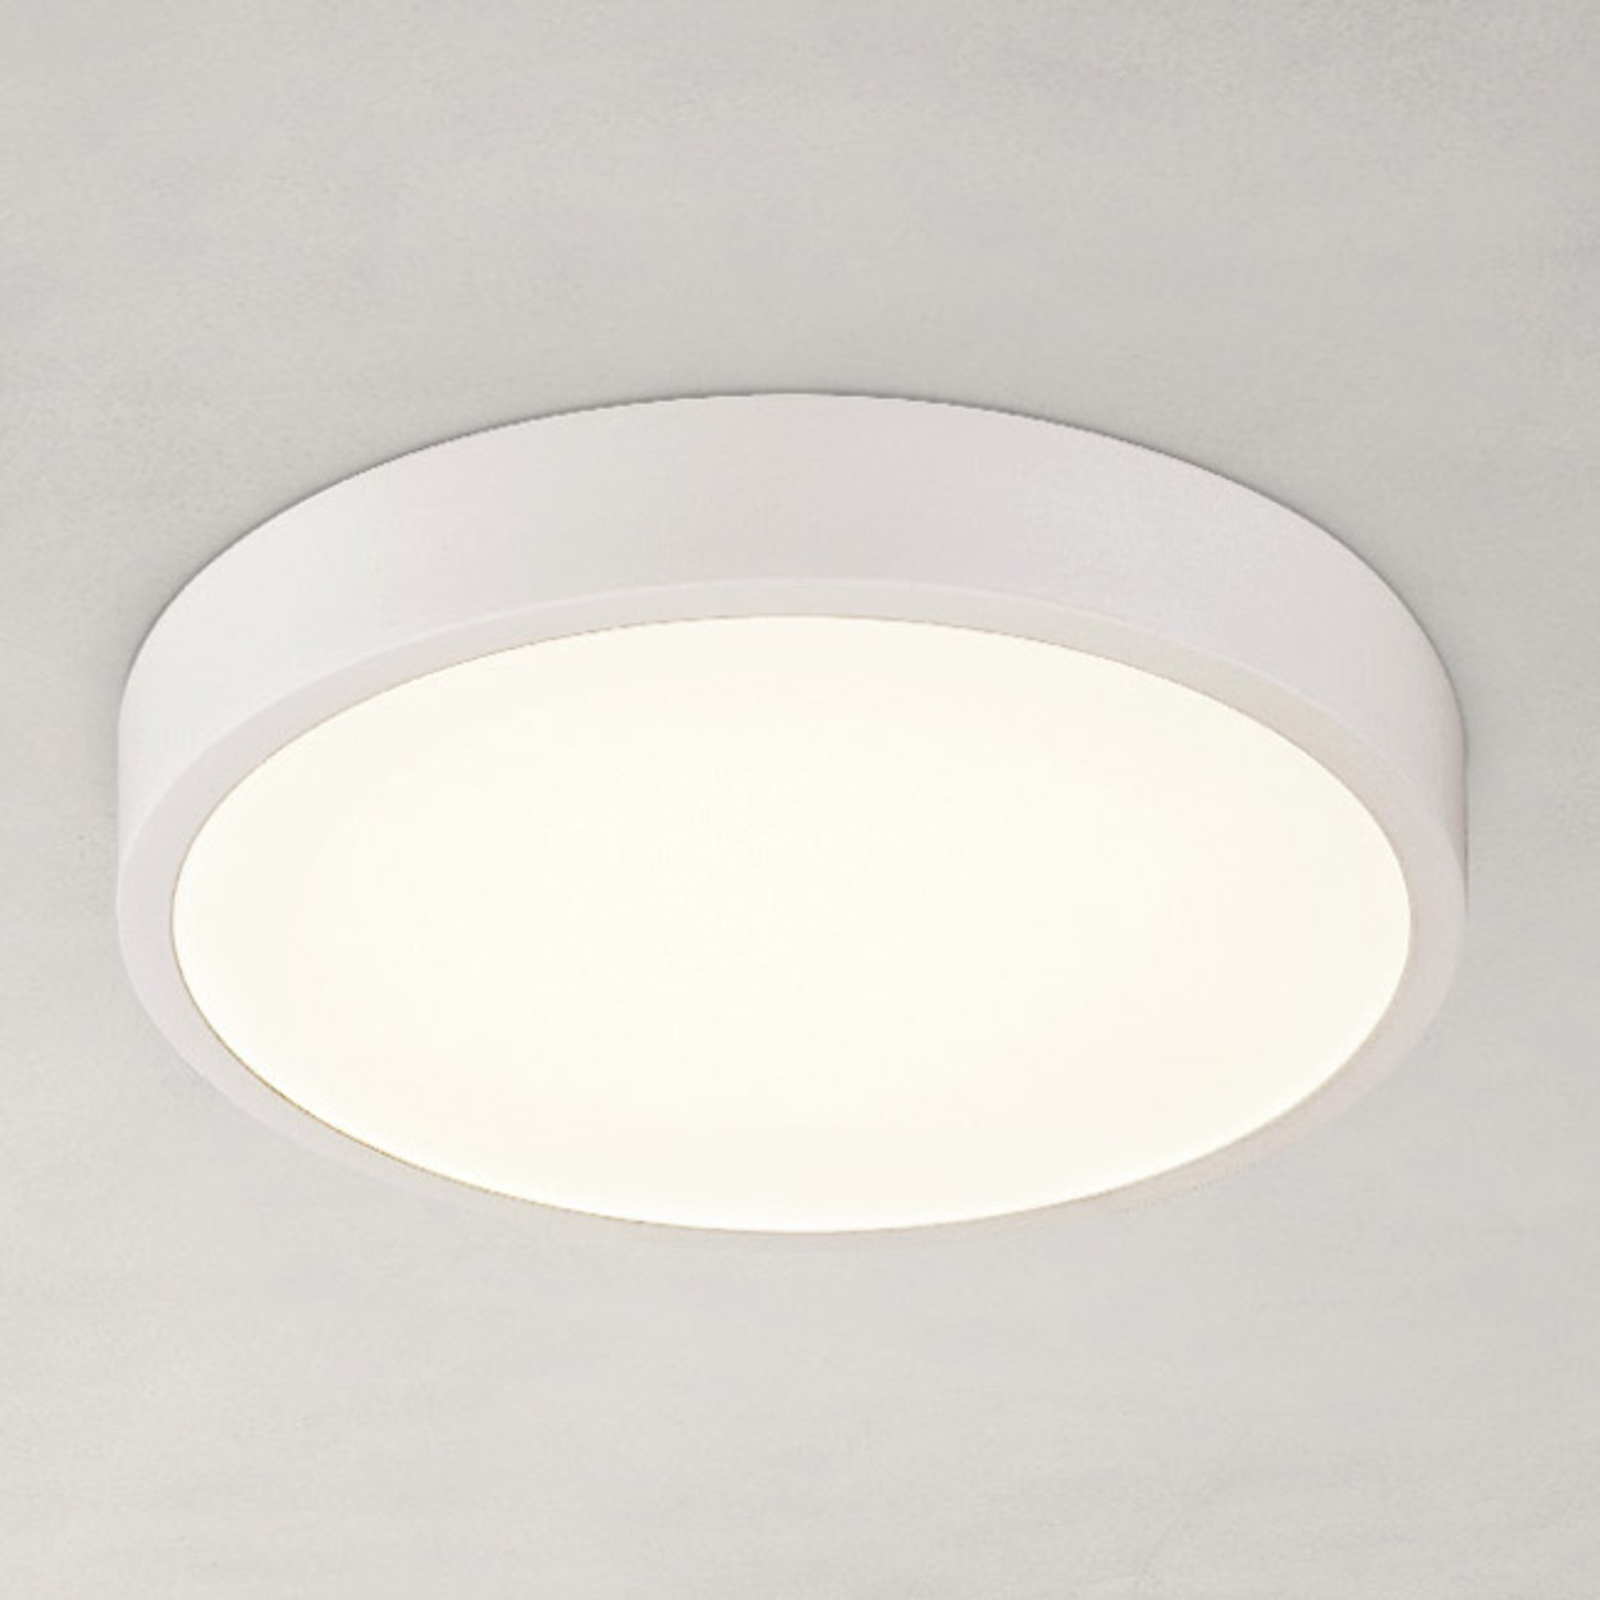 LED-taklampe Archimedes, dimbar, Ø 17 cm